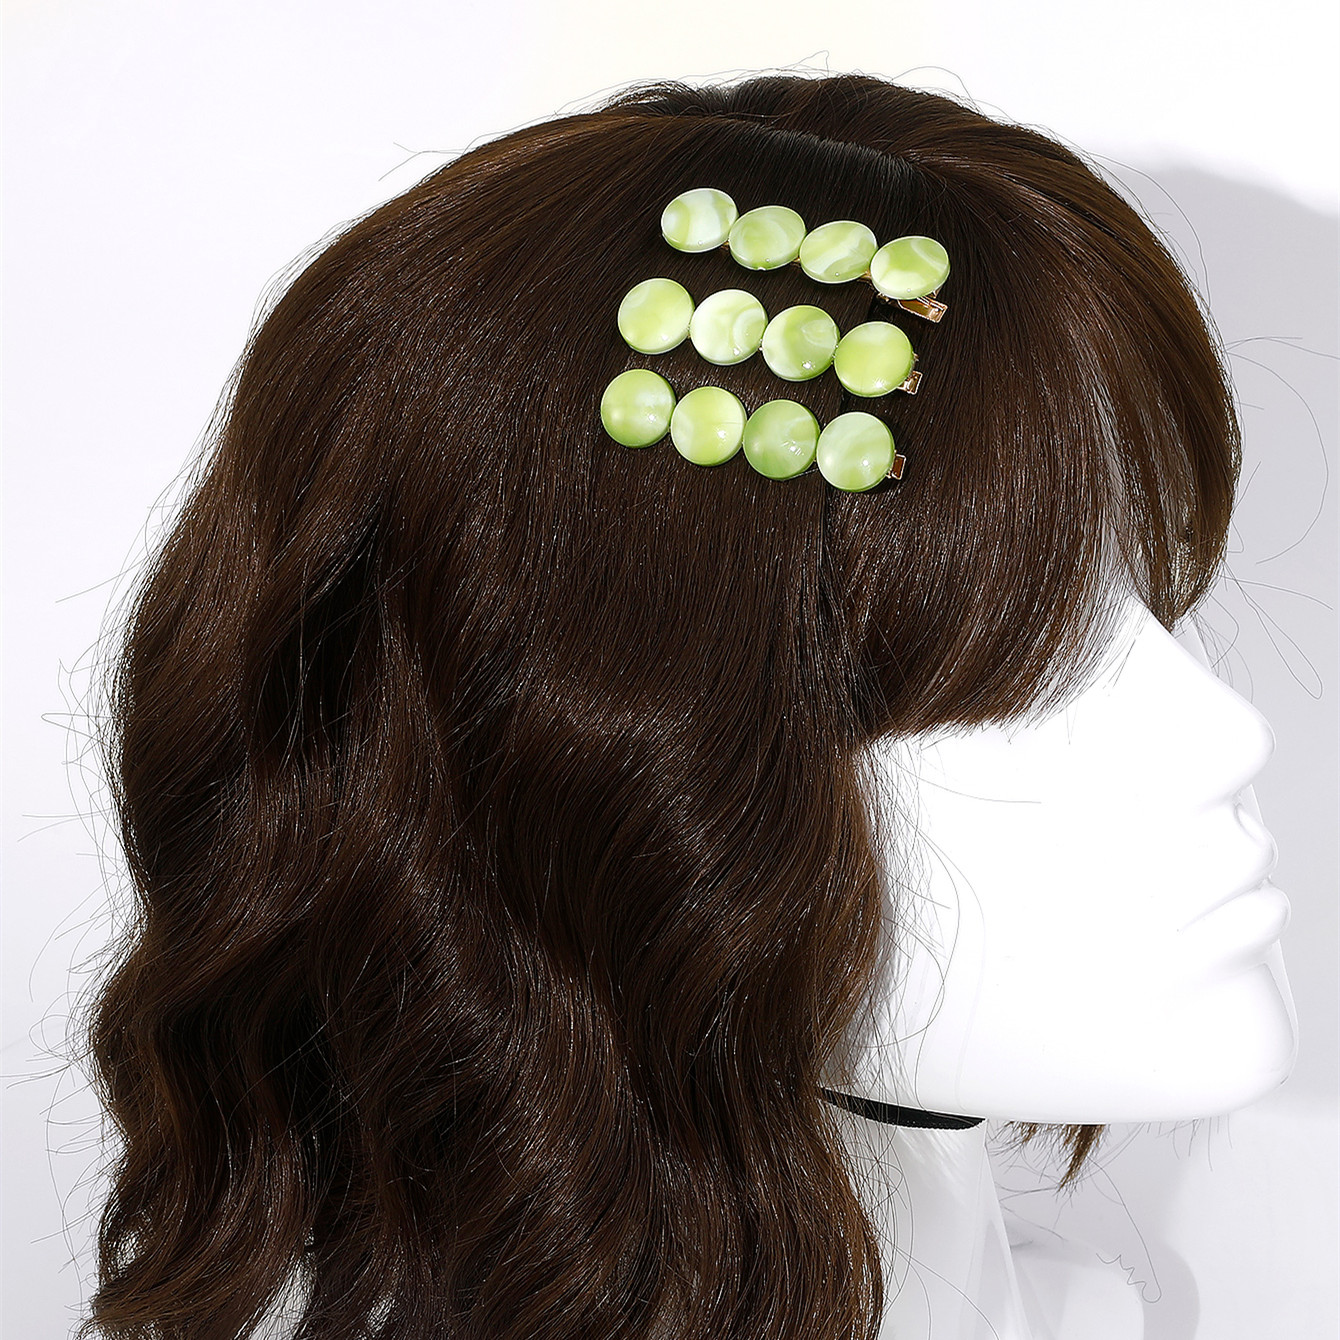 New apple green fresh round fashion creative hair clip 2 sets of hair accessories headdresspicture2